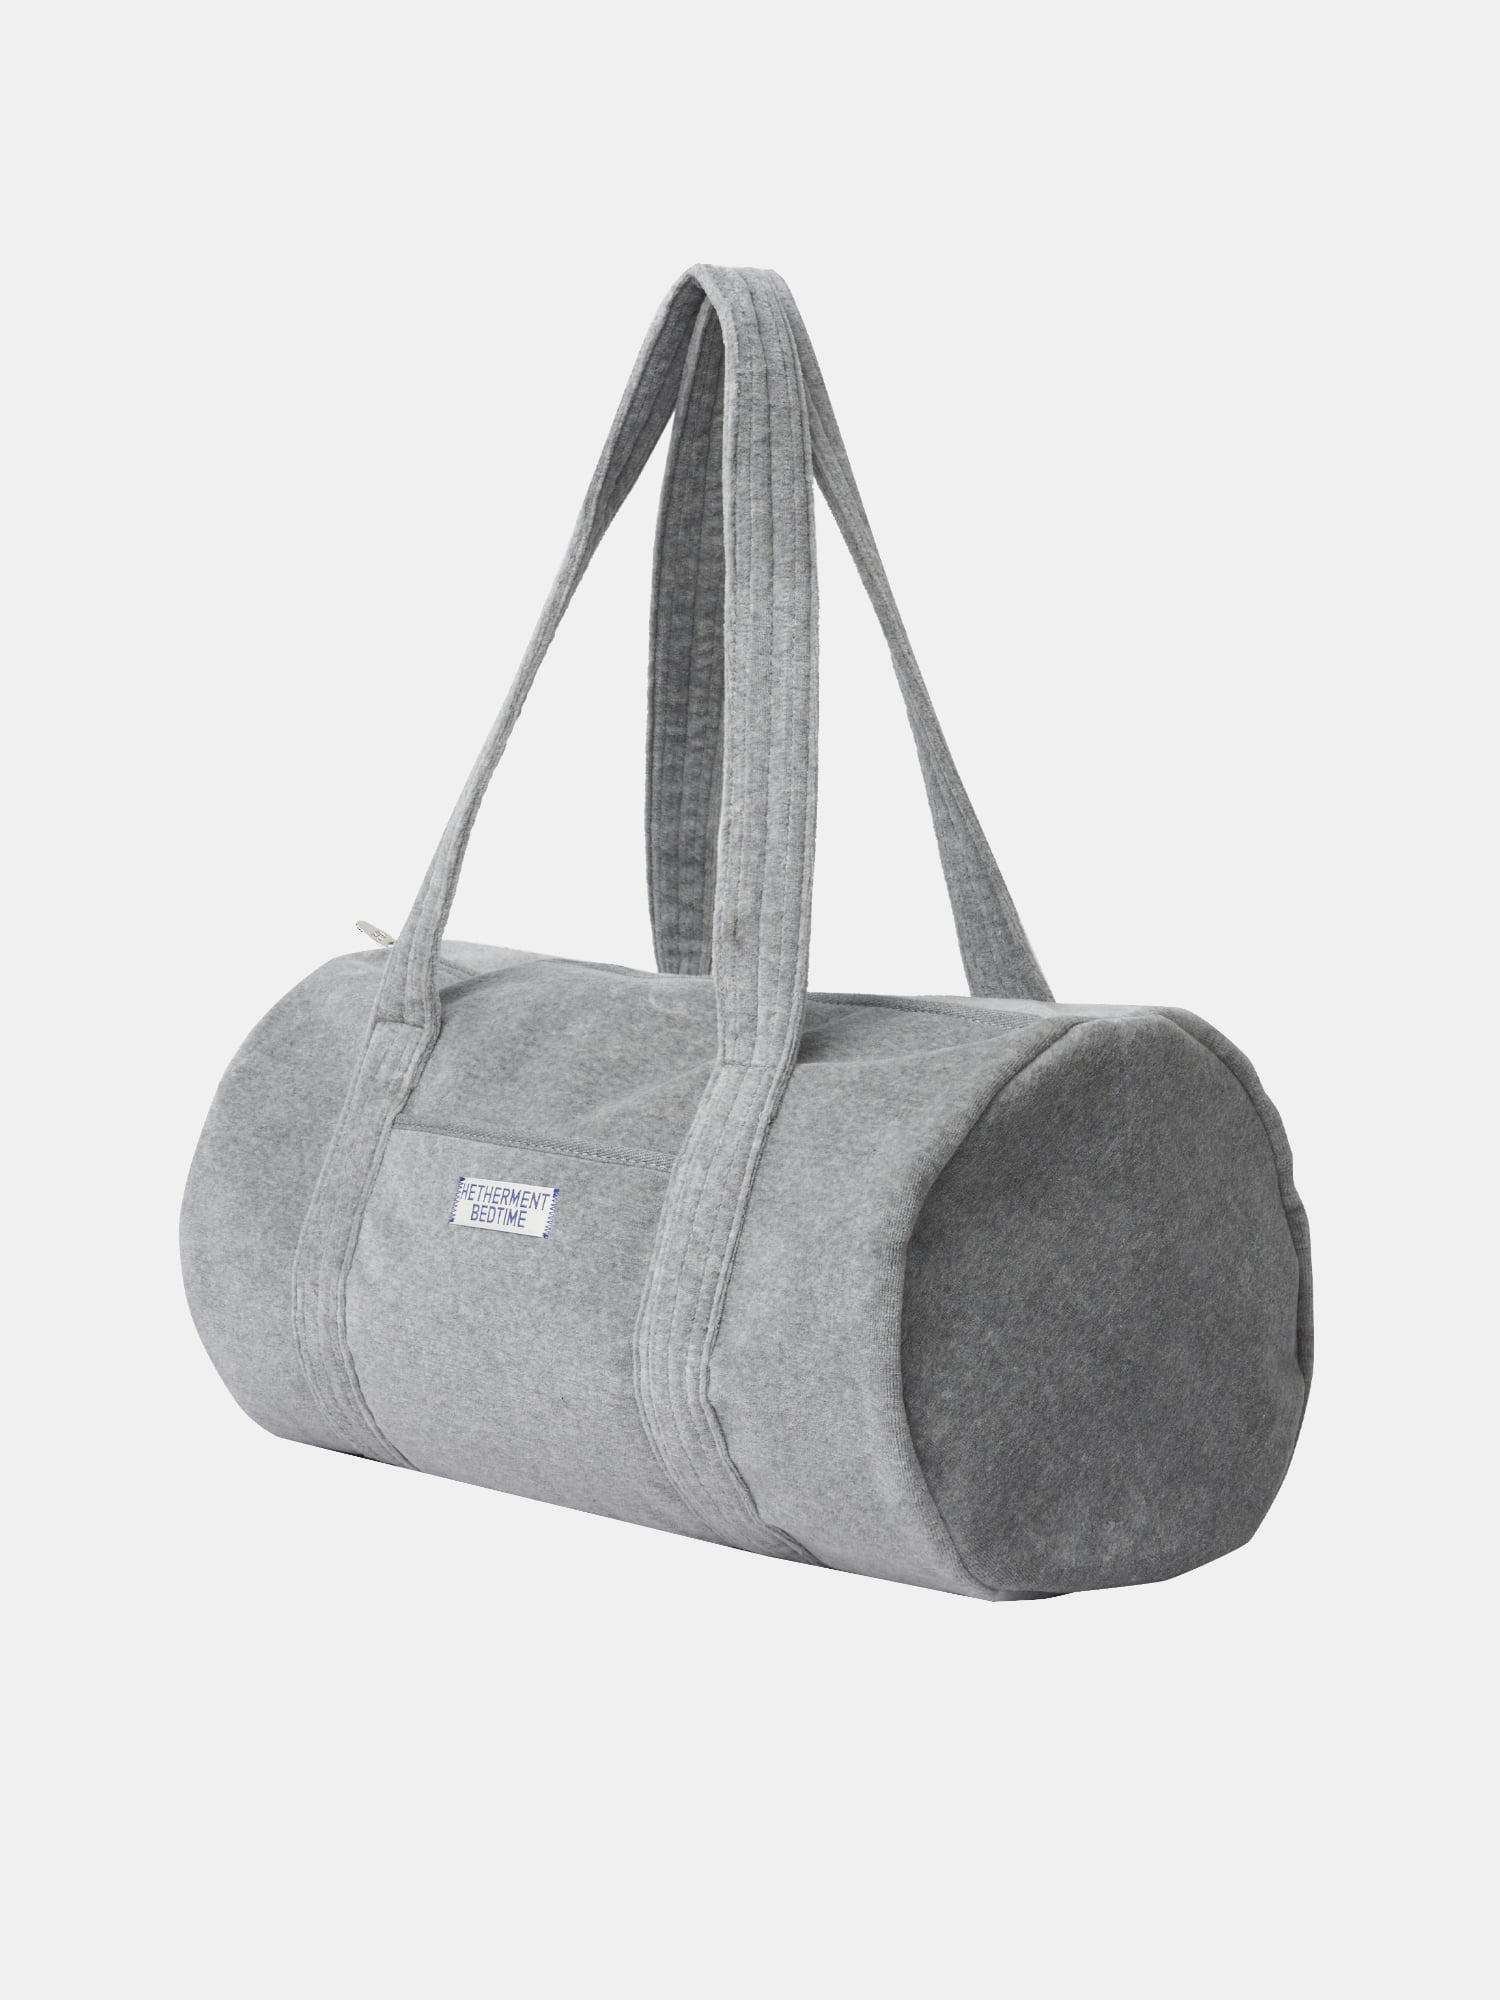 BEDTIME velour duffle bag (grey)